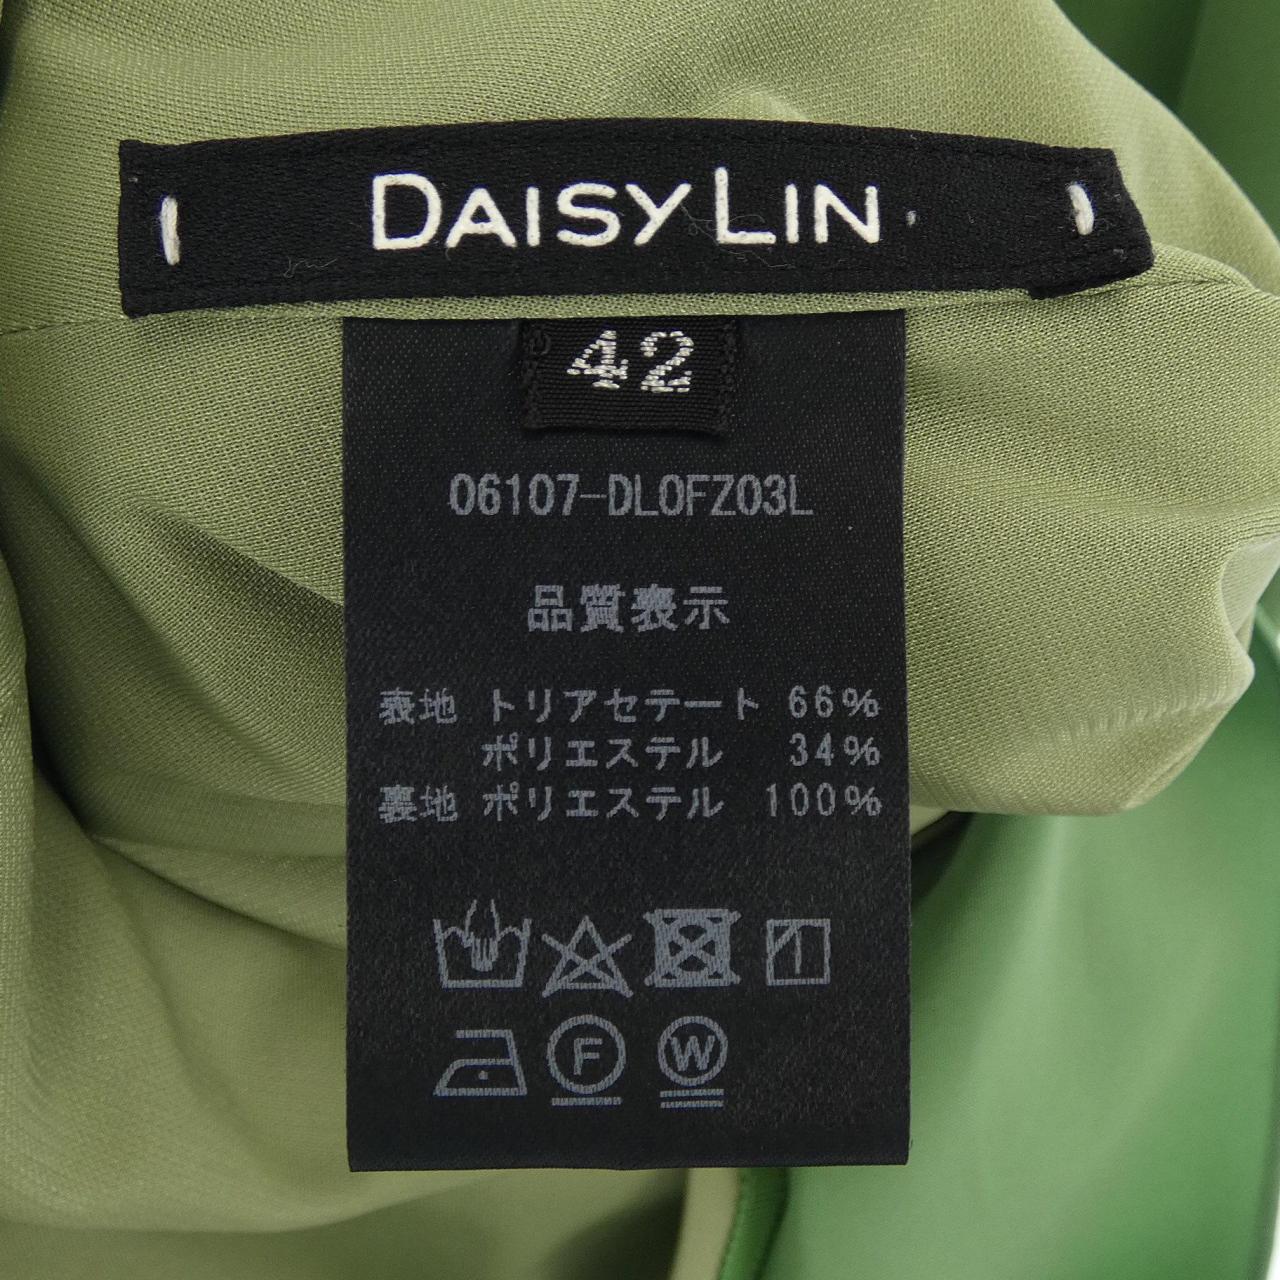 Daisy Lynn DAISY LIN dress